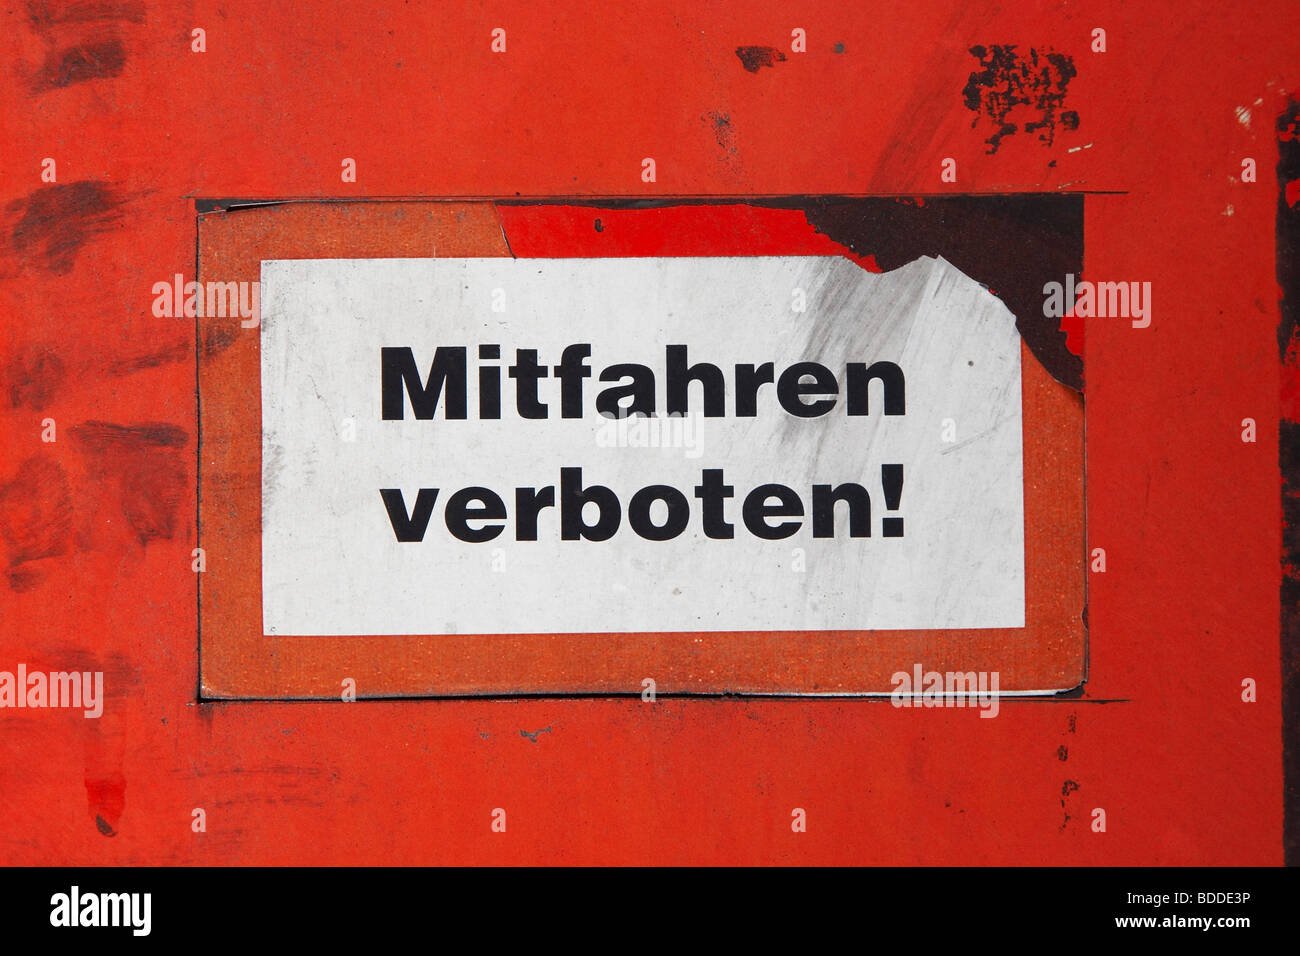 warning sign 'Mitfahren verboten!' Stock Photo